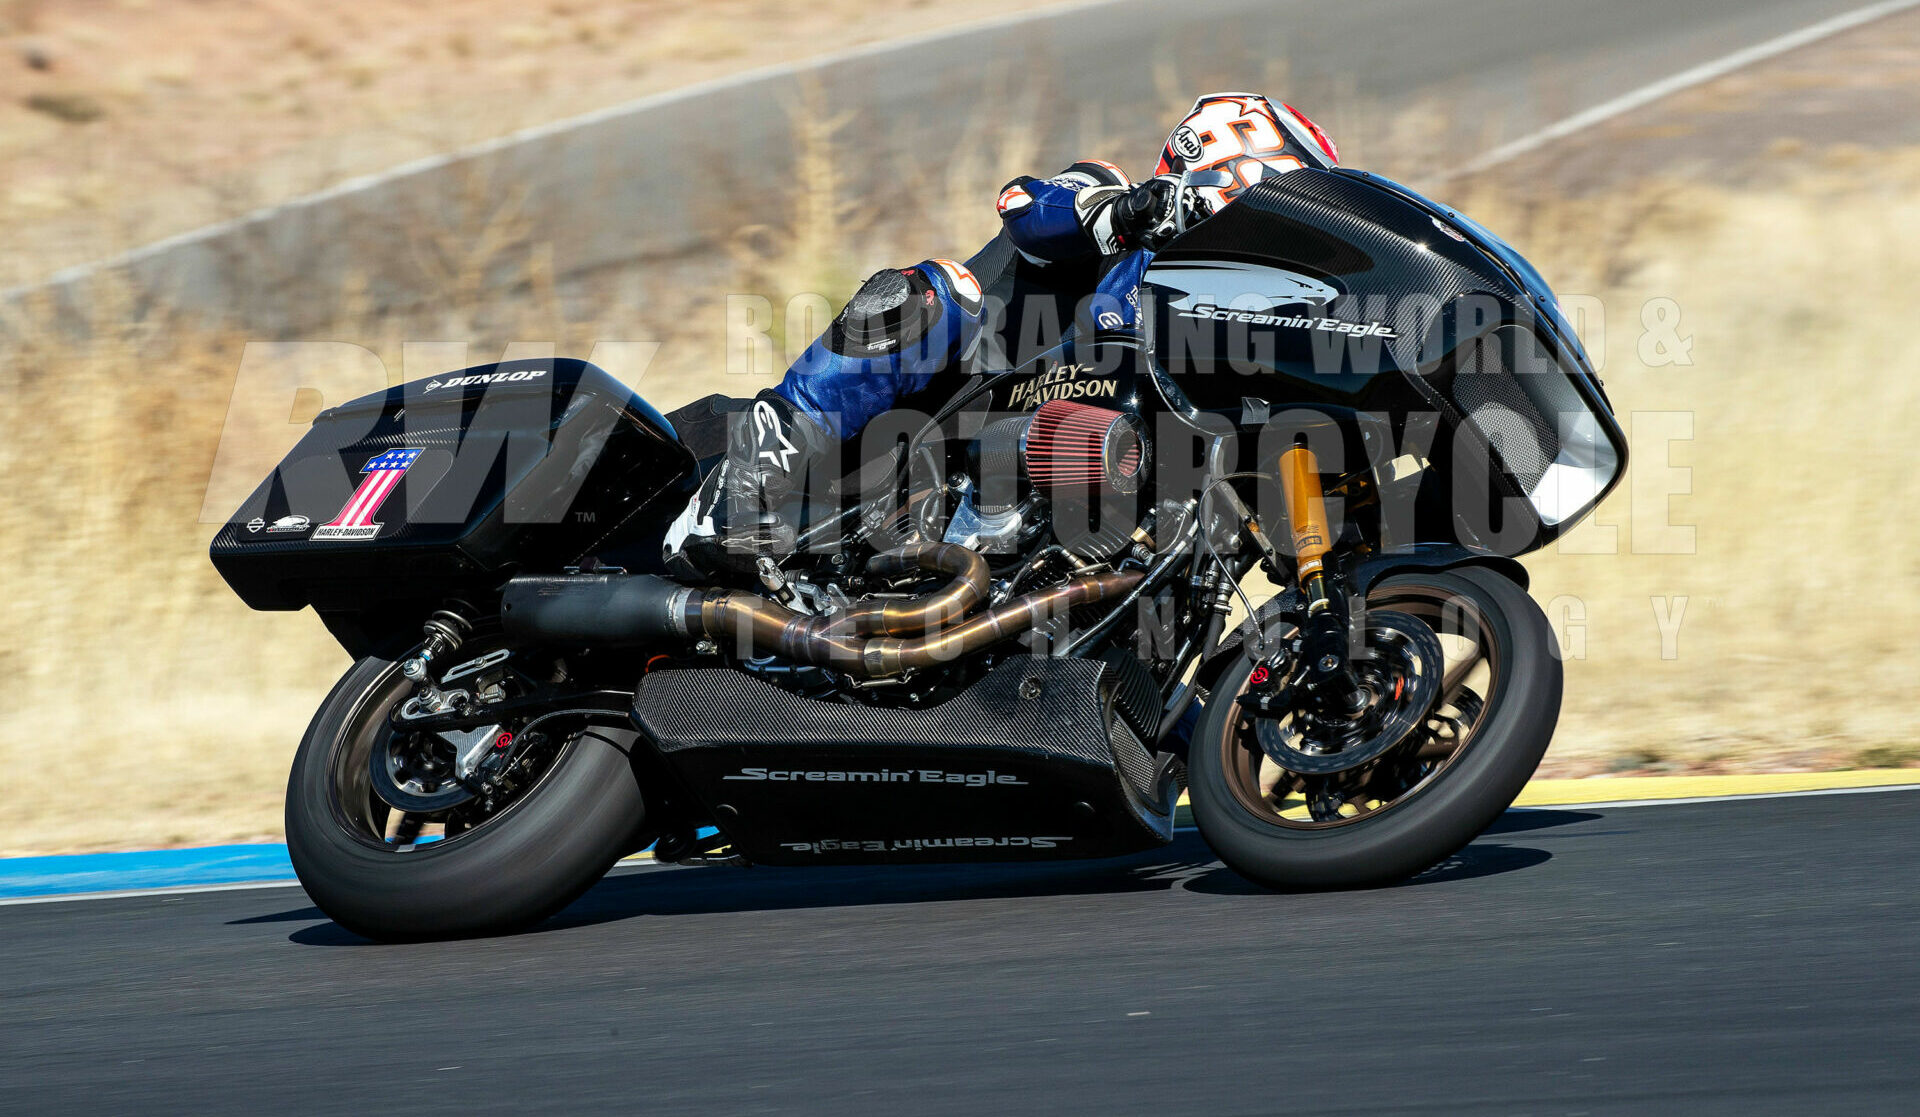 MotoAmerica: Riding Harley-Davidson's Road Glide 131R Bagger